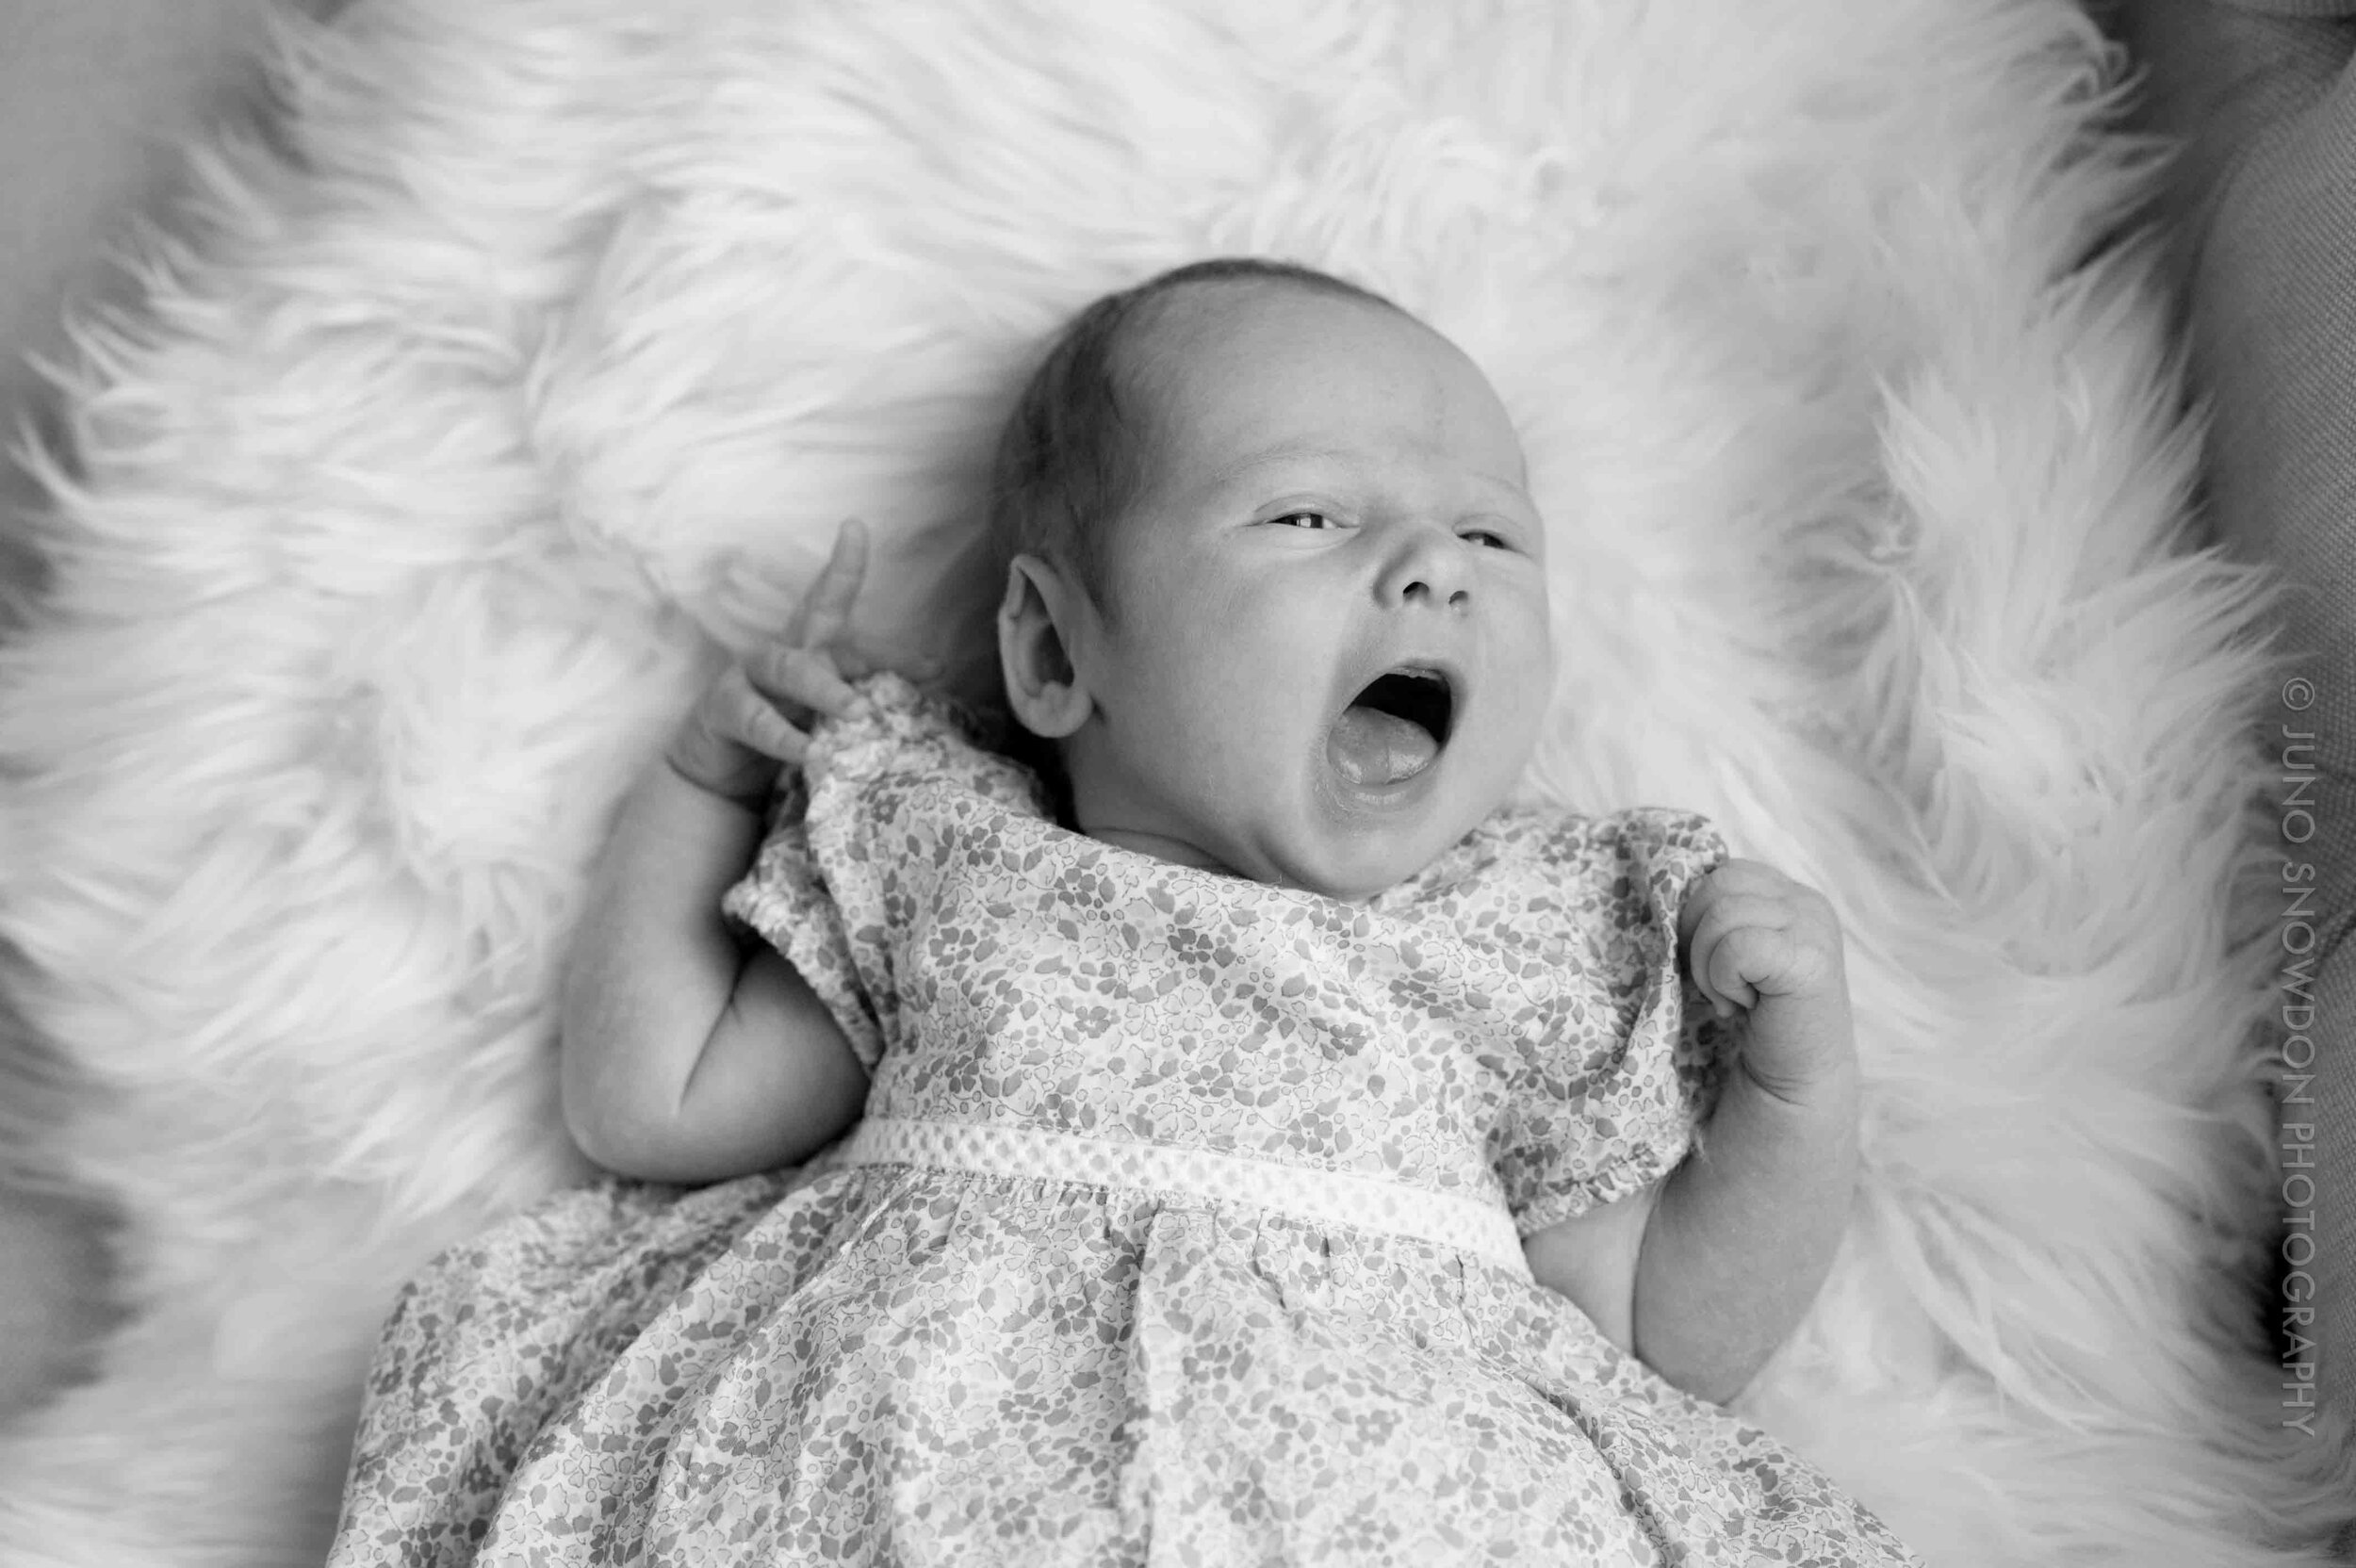 juno-snowdon-photography-newborn-family-portraits-london-2242.jpg